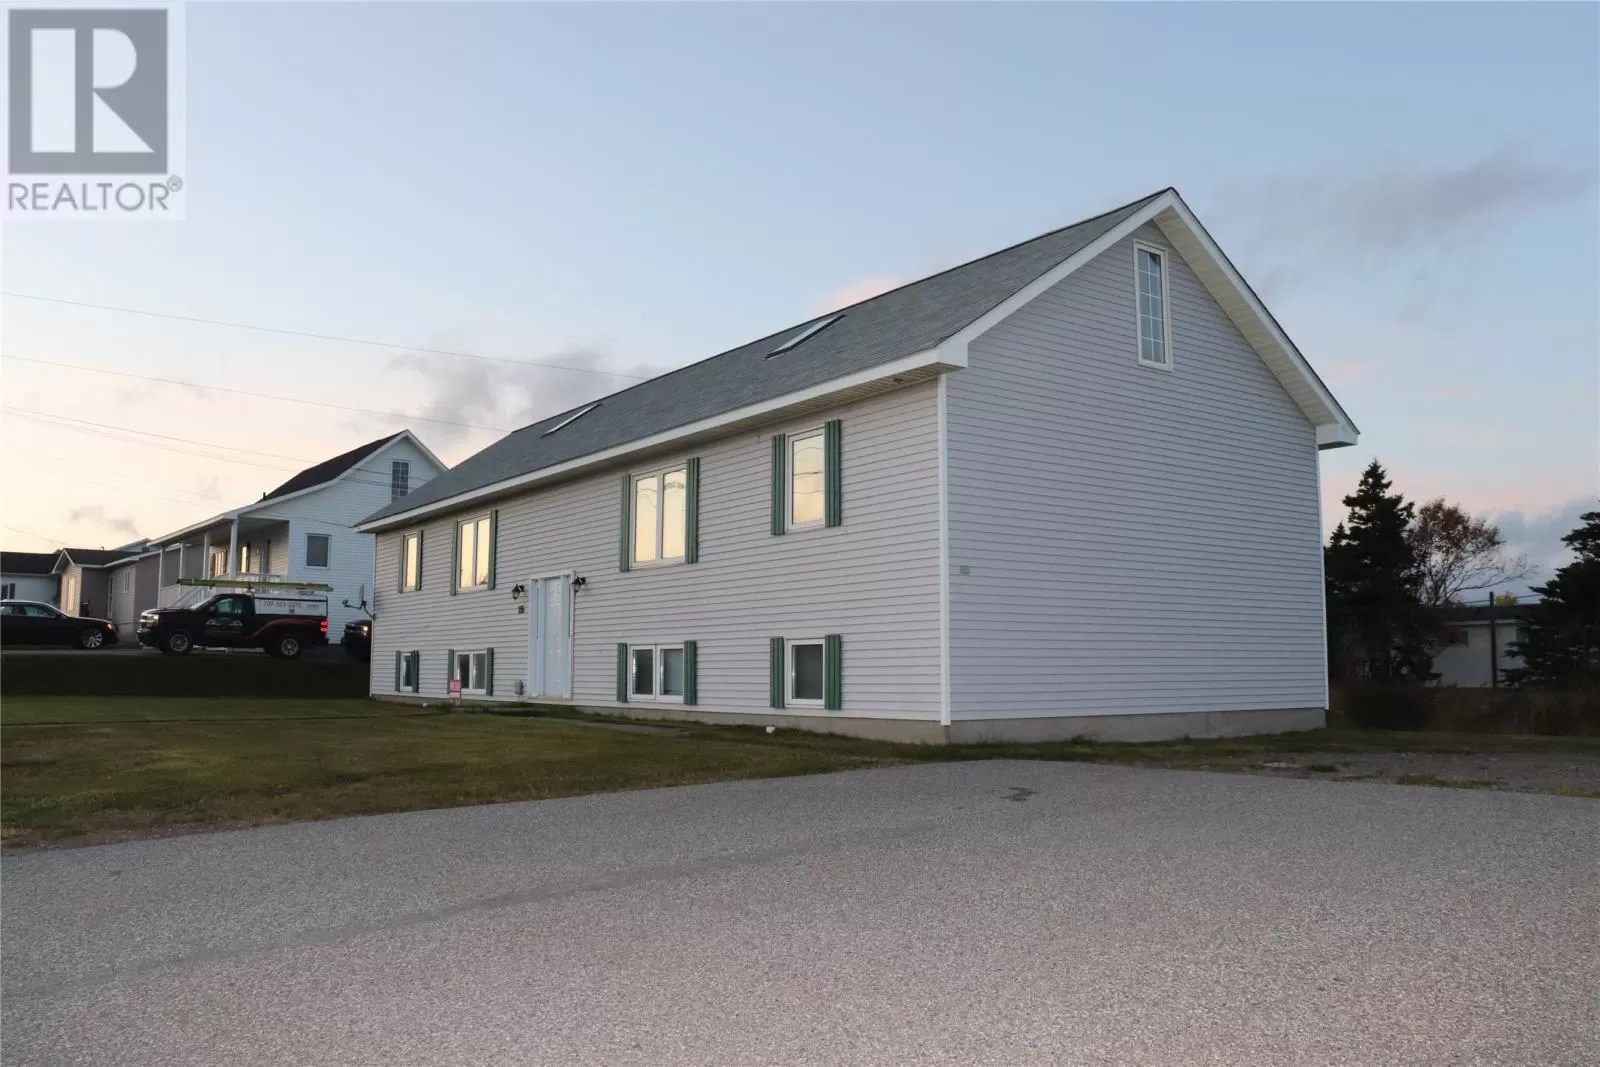 Multi-Family for rent: 153-155 West Street, Stephenville, Newfoundland & Labrador A2N 1E7